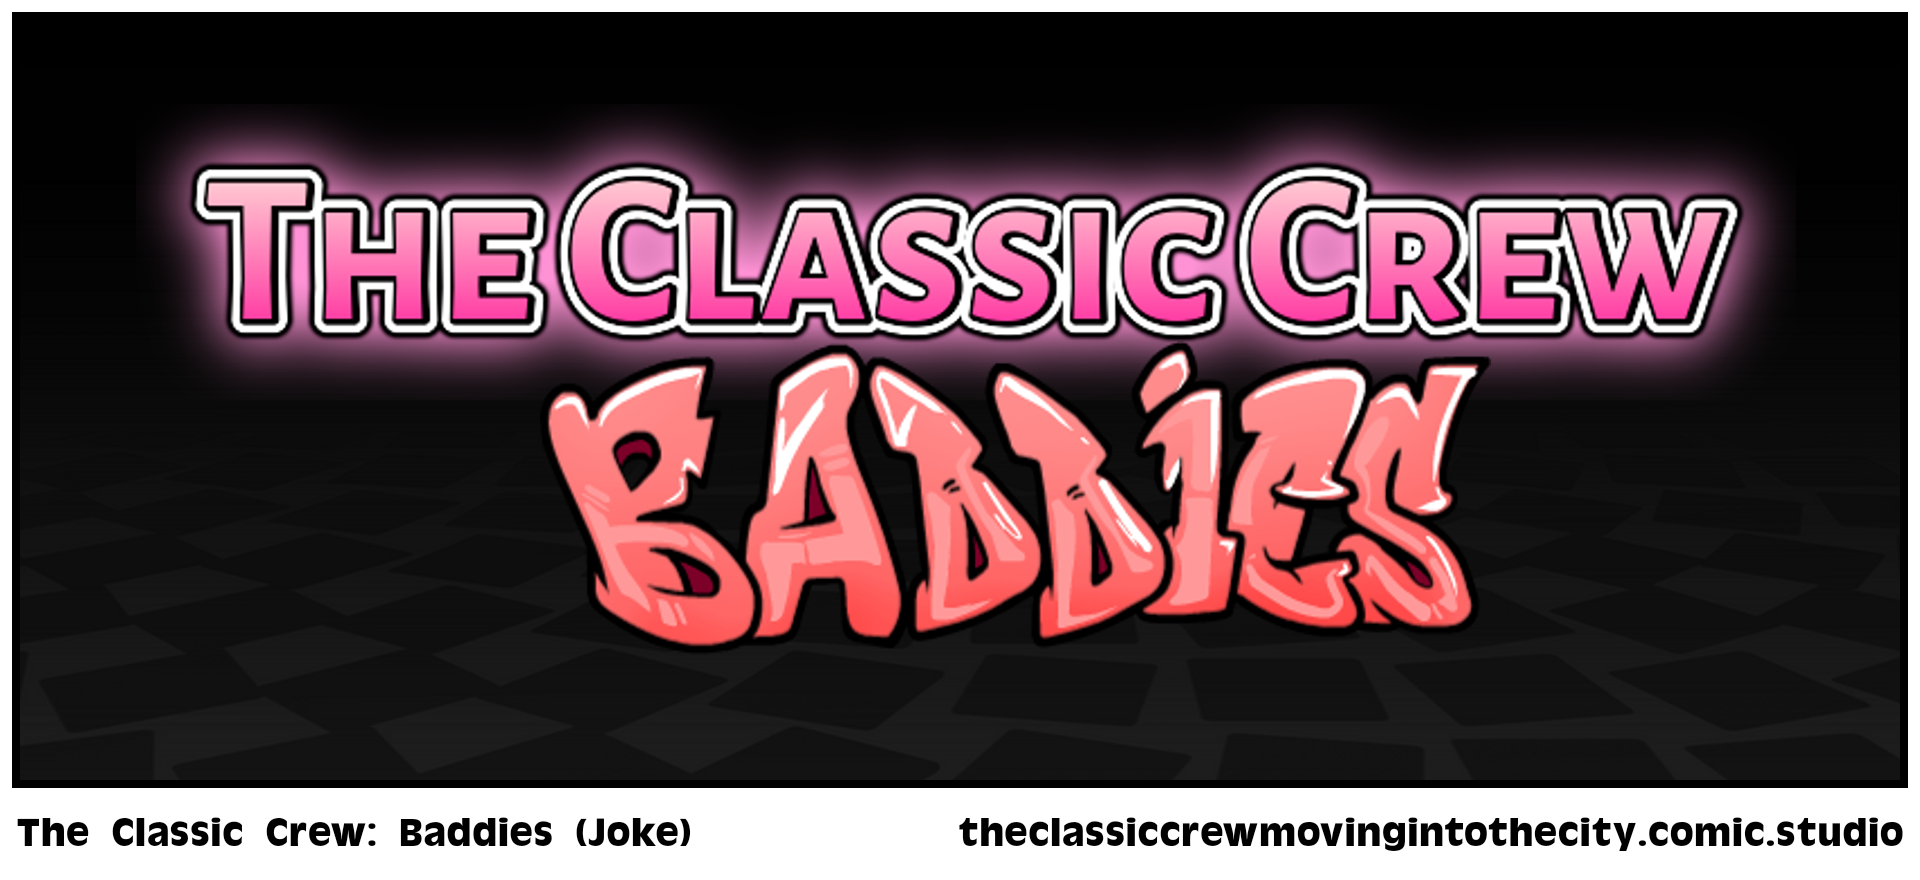 The Classic Crew: Baddies (Joke)